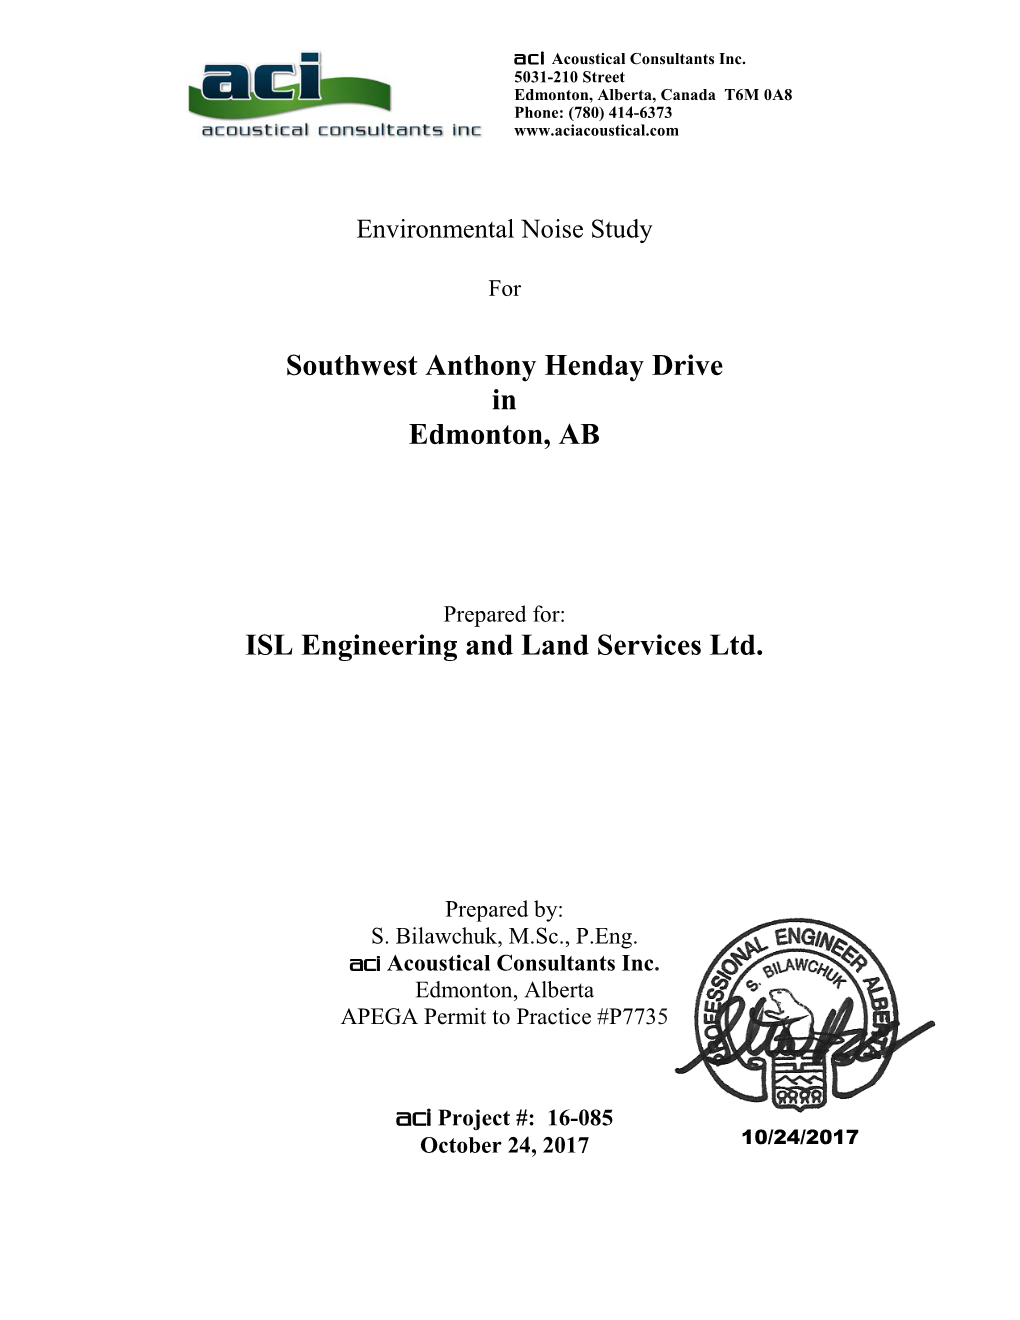 Environmental Noise Study for Southwest Anthony Henday Drive in Edmonton, AB